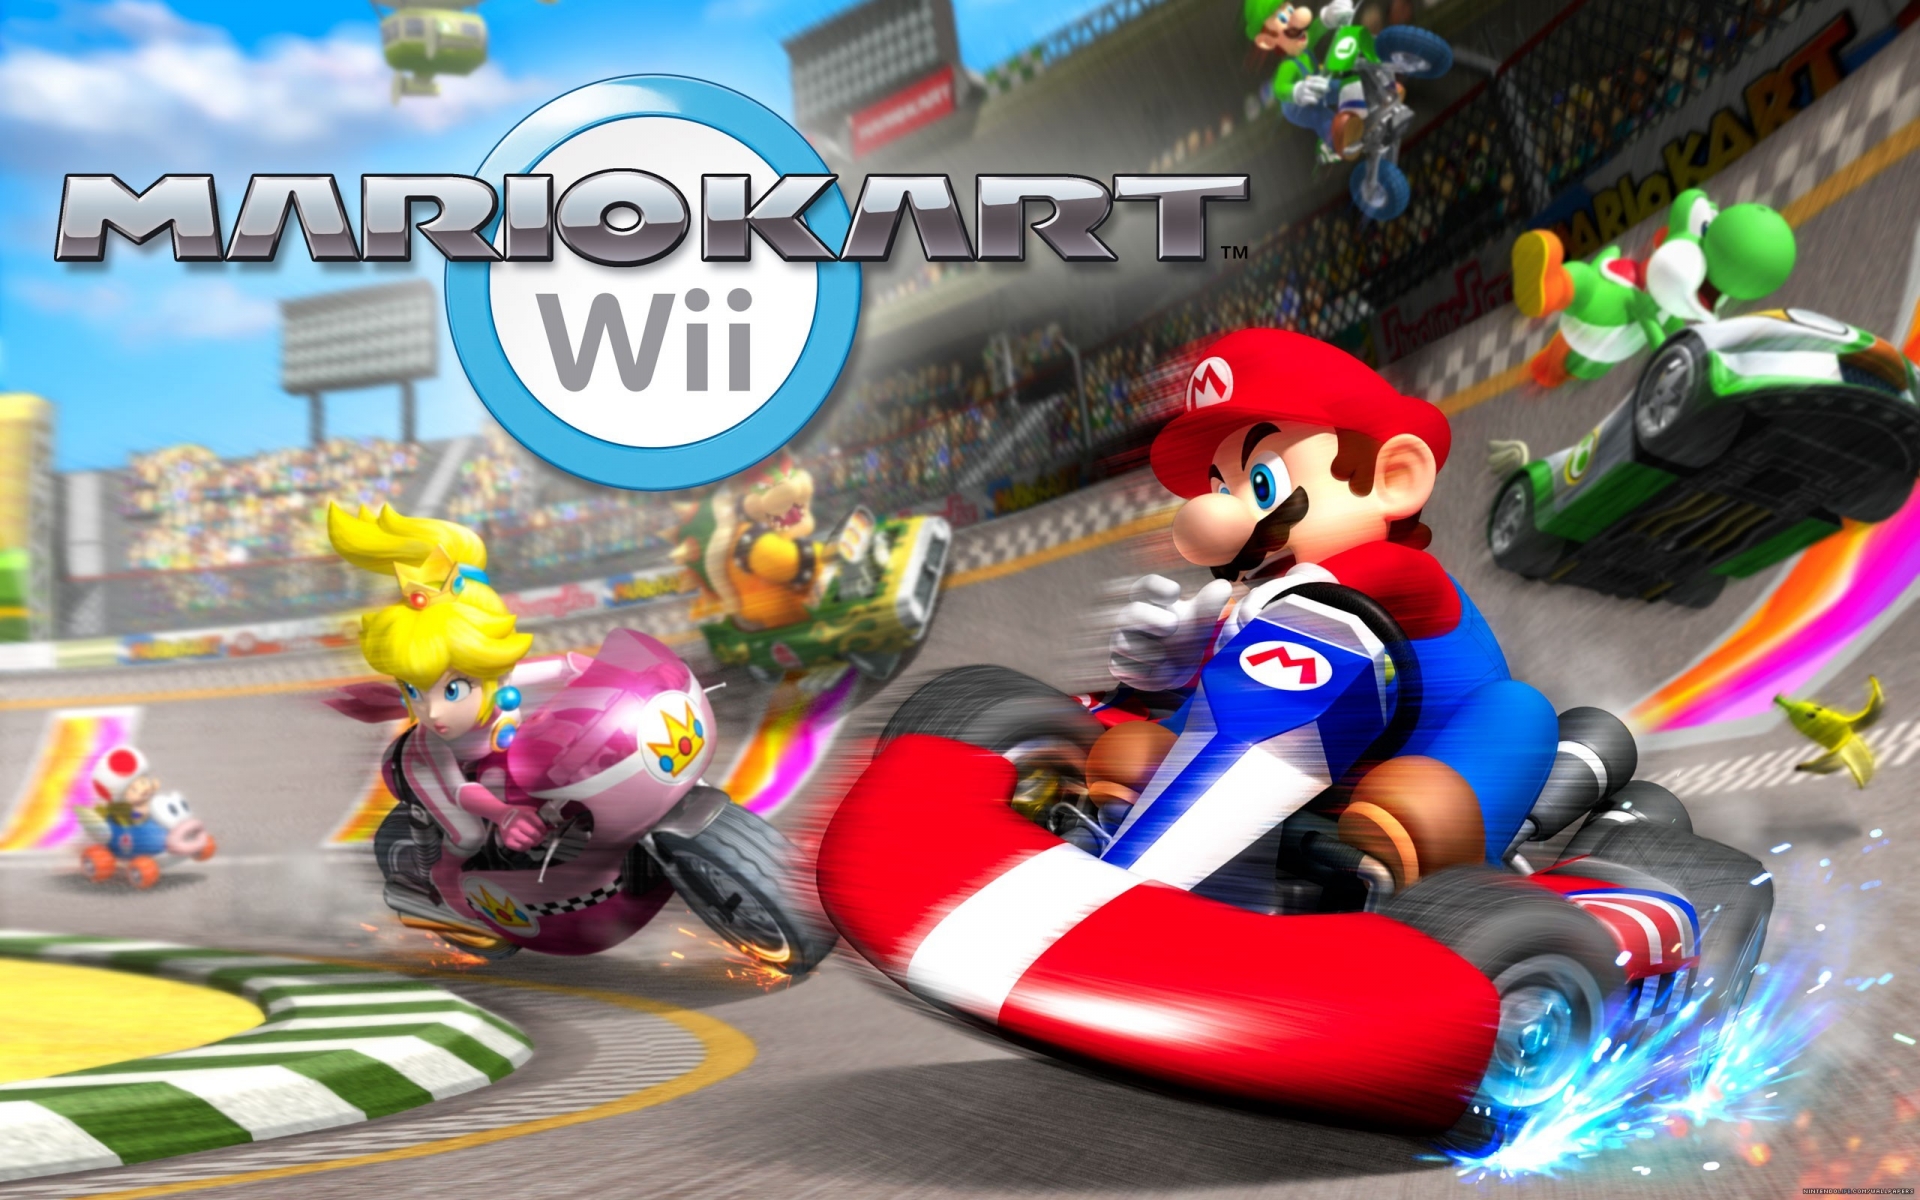 Mario Kart Wii for 1920 x 1200 widescreen resolution